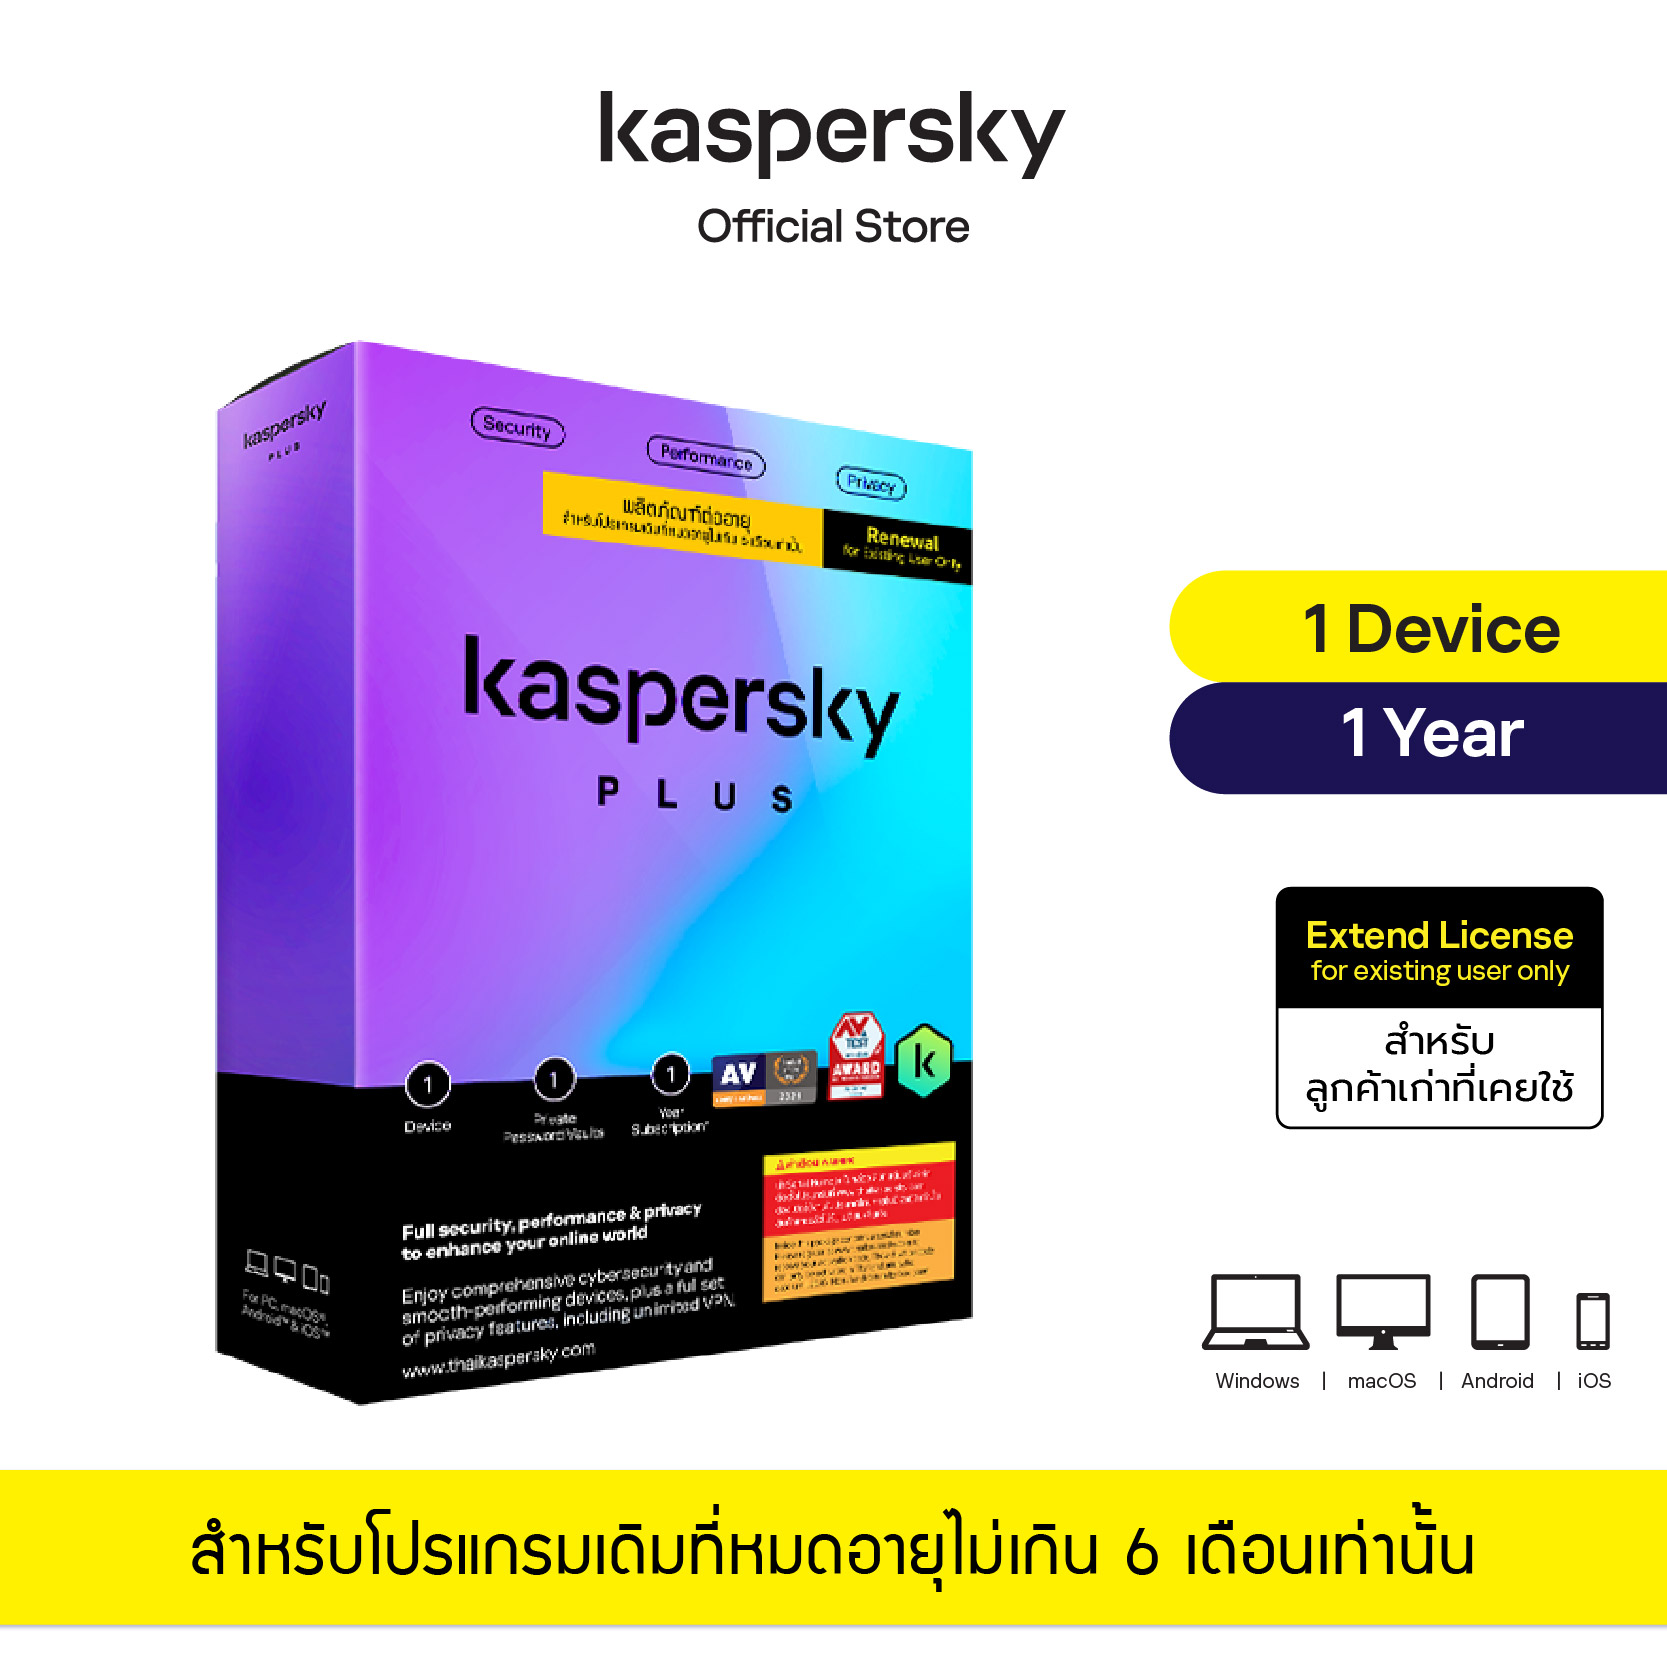 Kaspersky Plus 1 Device 1 Year (Extend License)